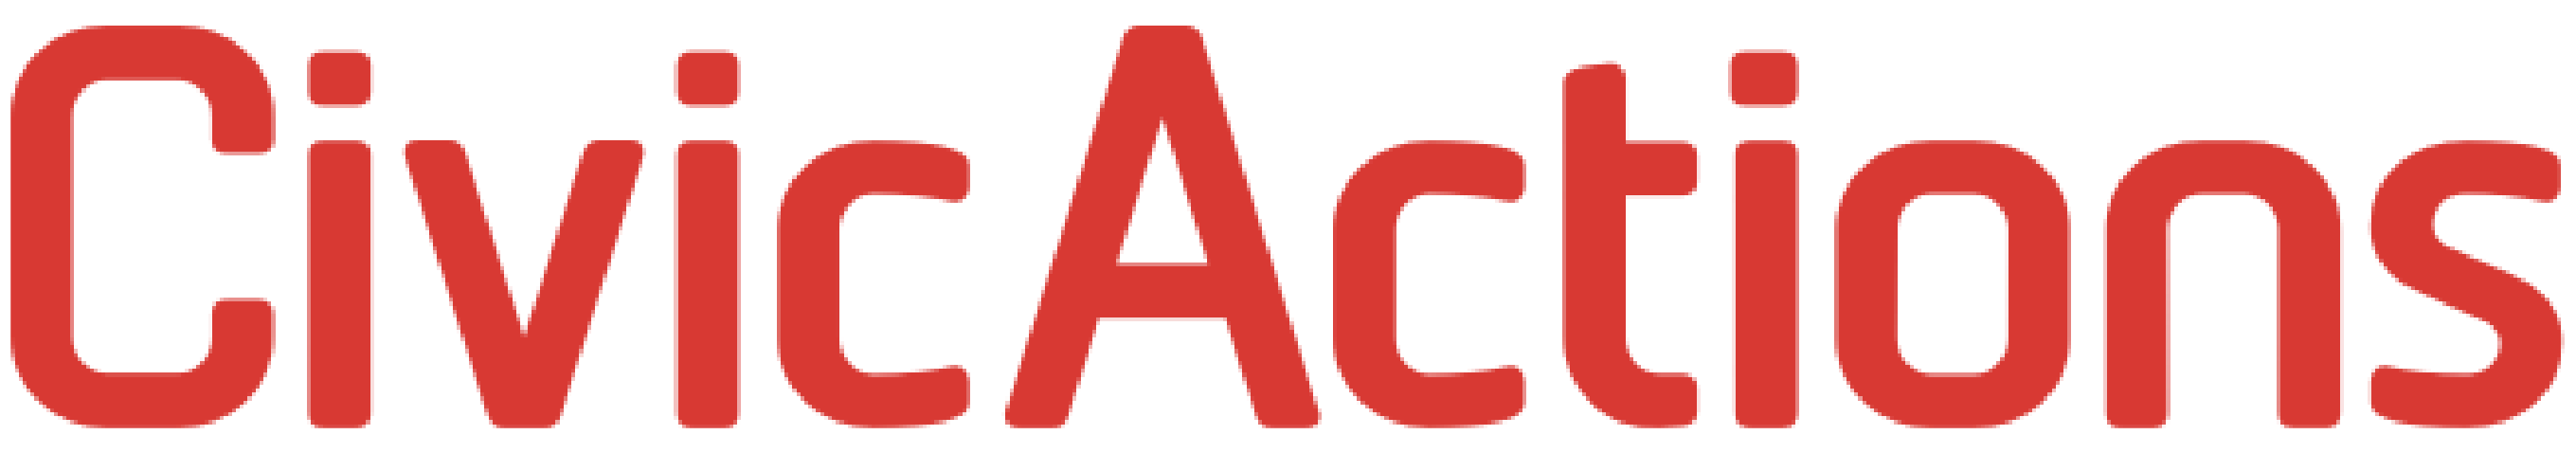 CivicAction logo